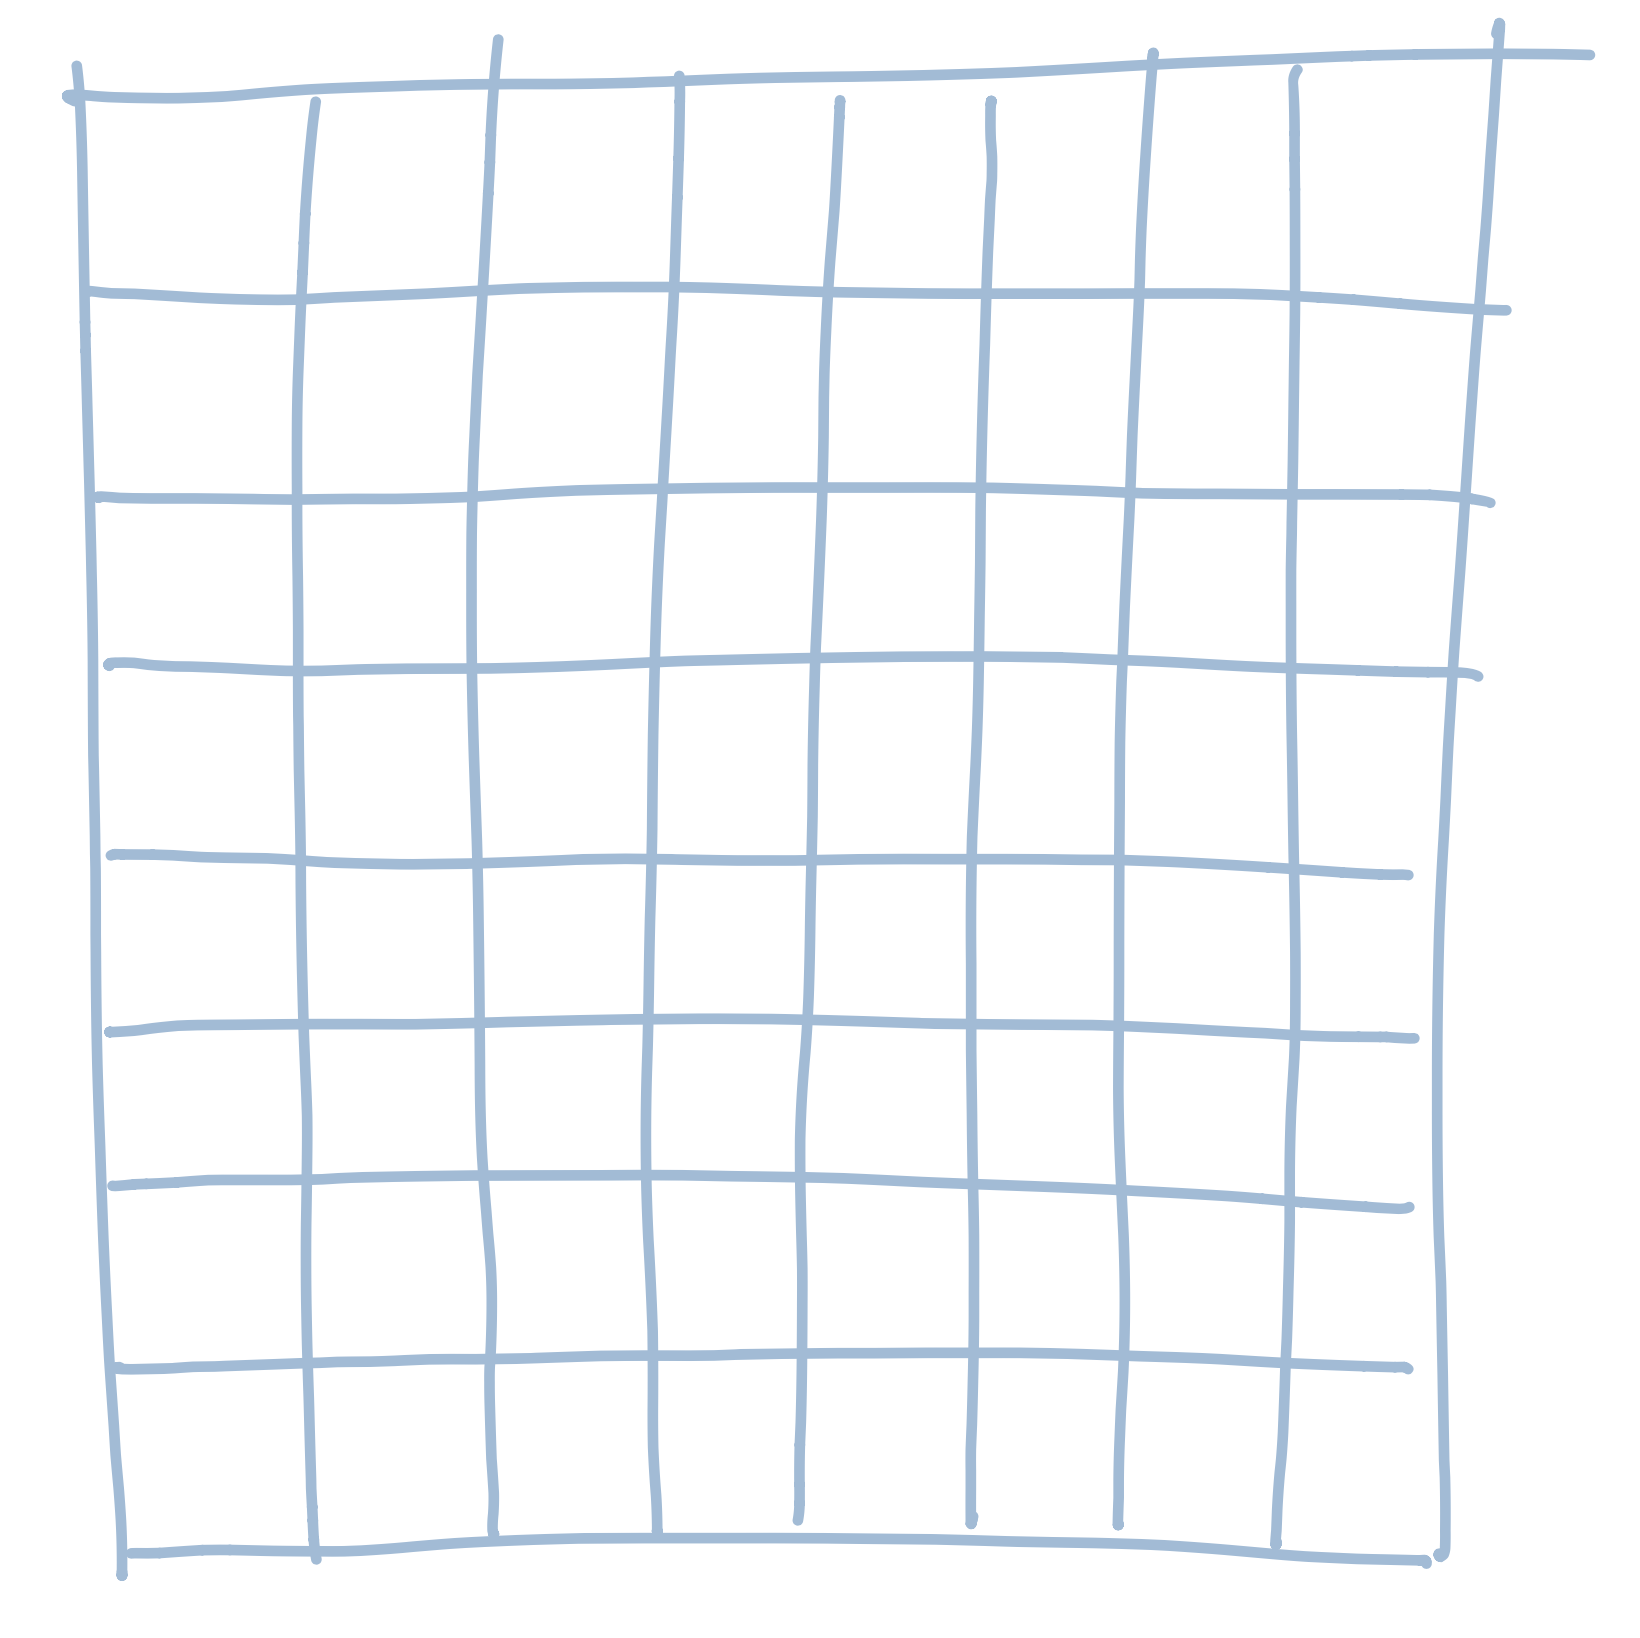 Illustration of graph paper